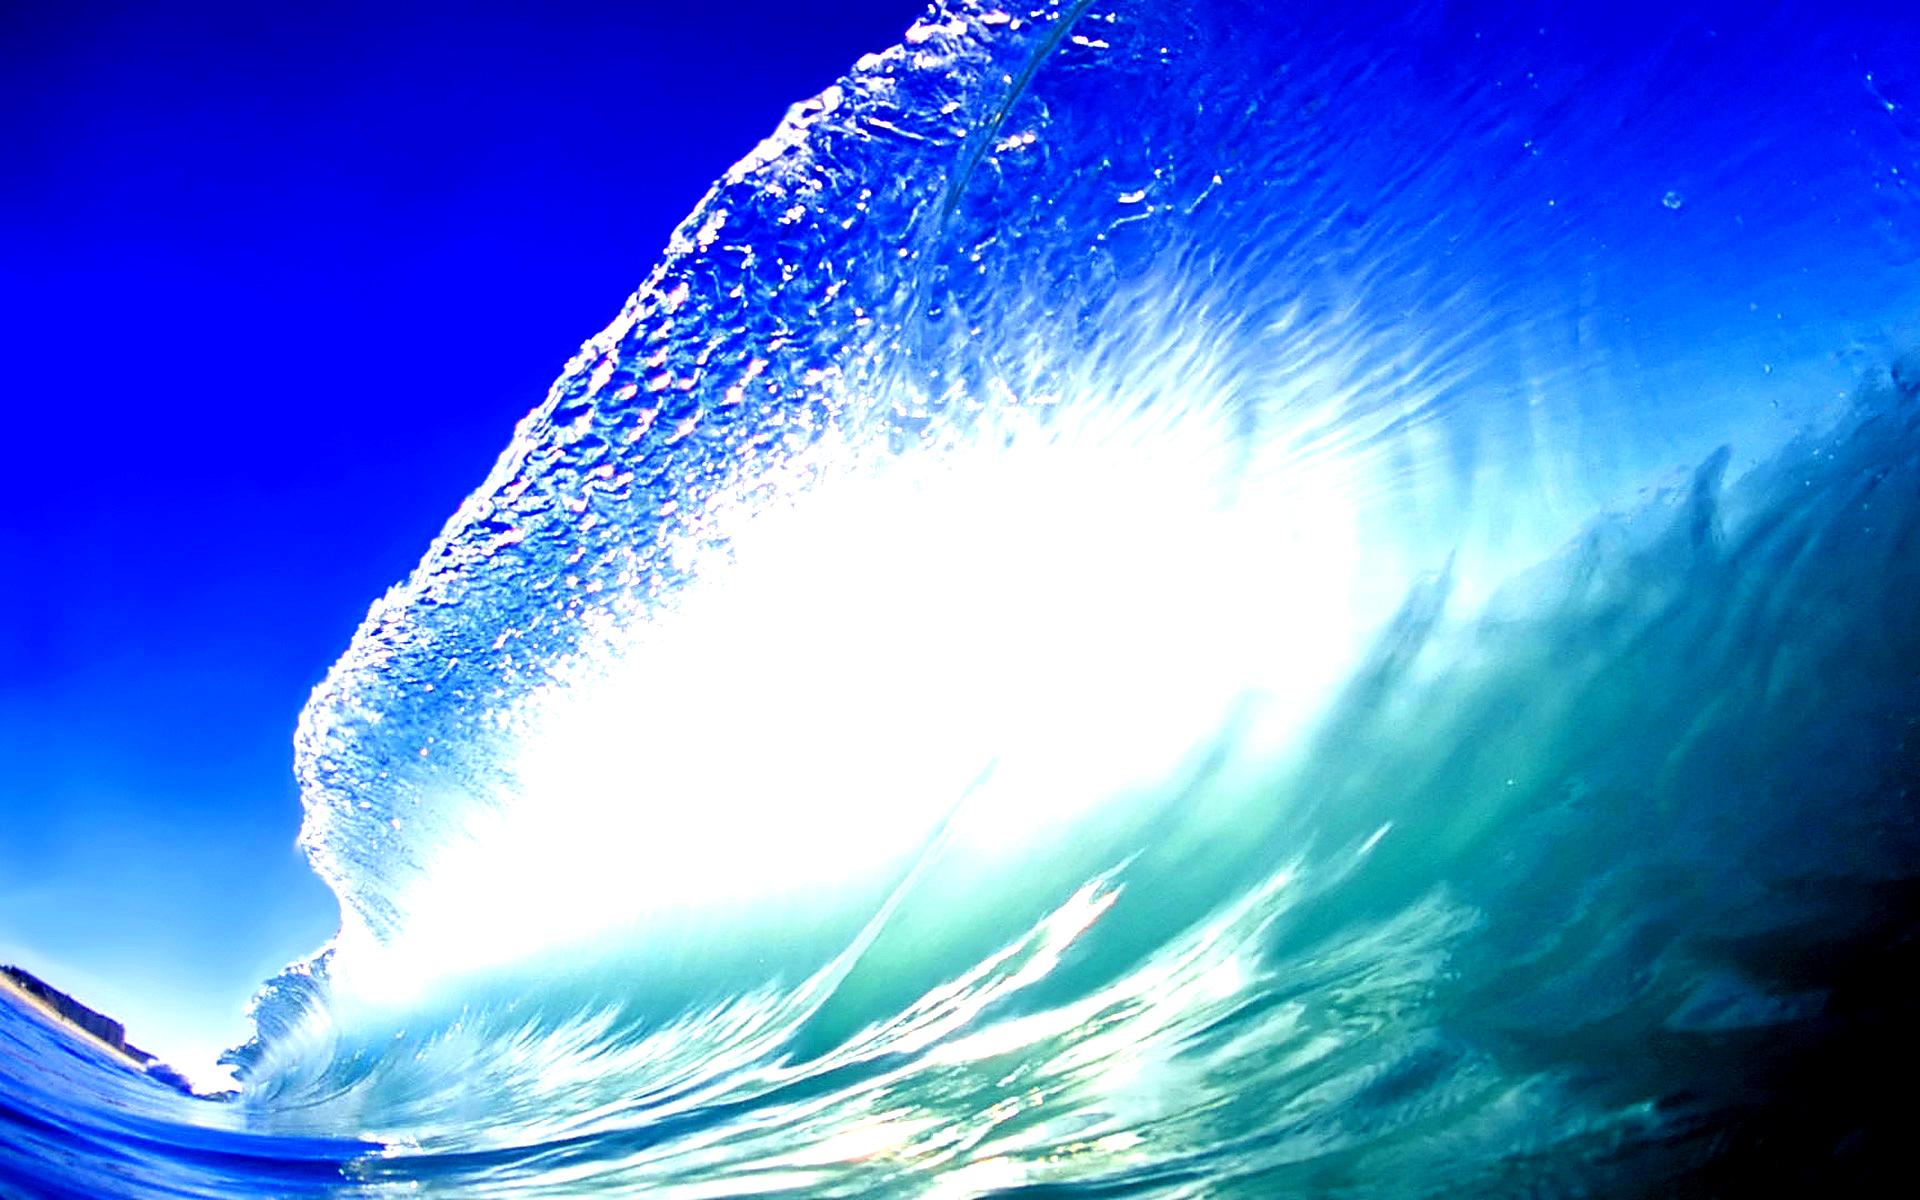 ocean_wave_water_tsunami_nature_hogh_contrast_hd-wallpaper-1438078.jpg